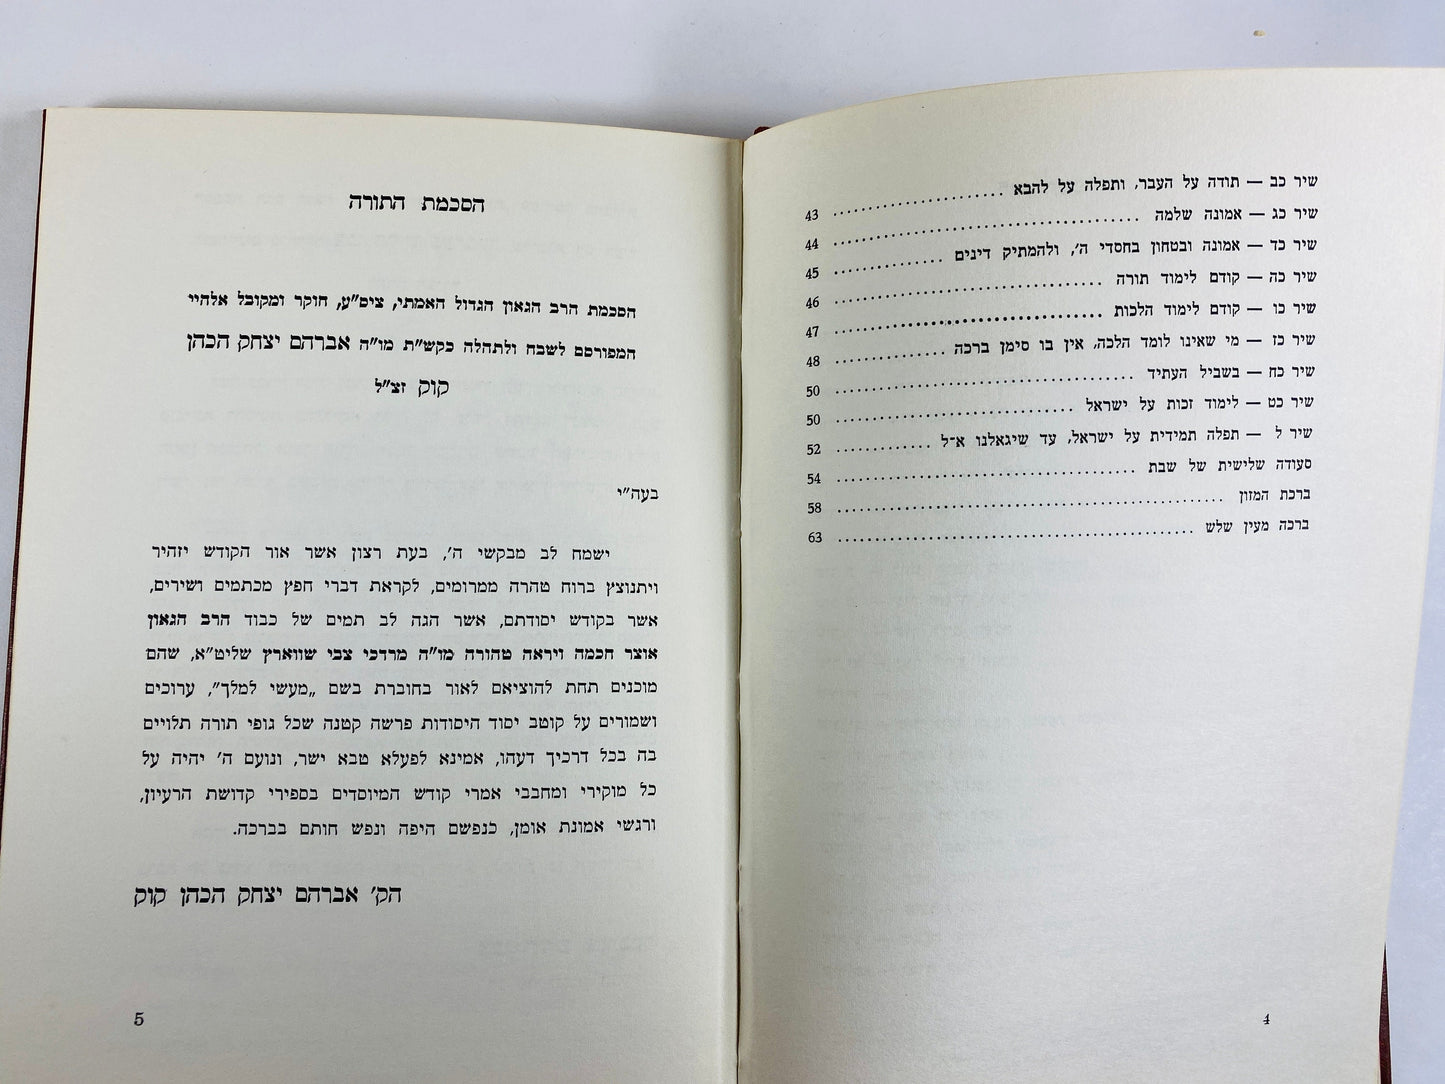 Myer Schwartz Shirah Hadashah Vintage Jewish Hebrew Book of Prayers Siddur bible circa 1966